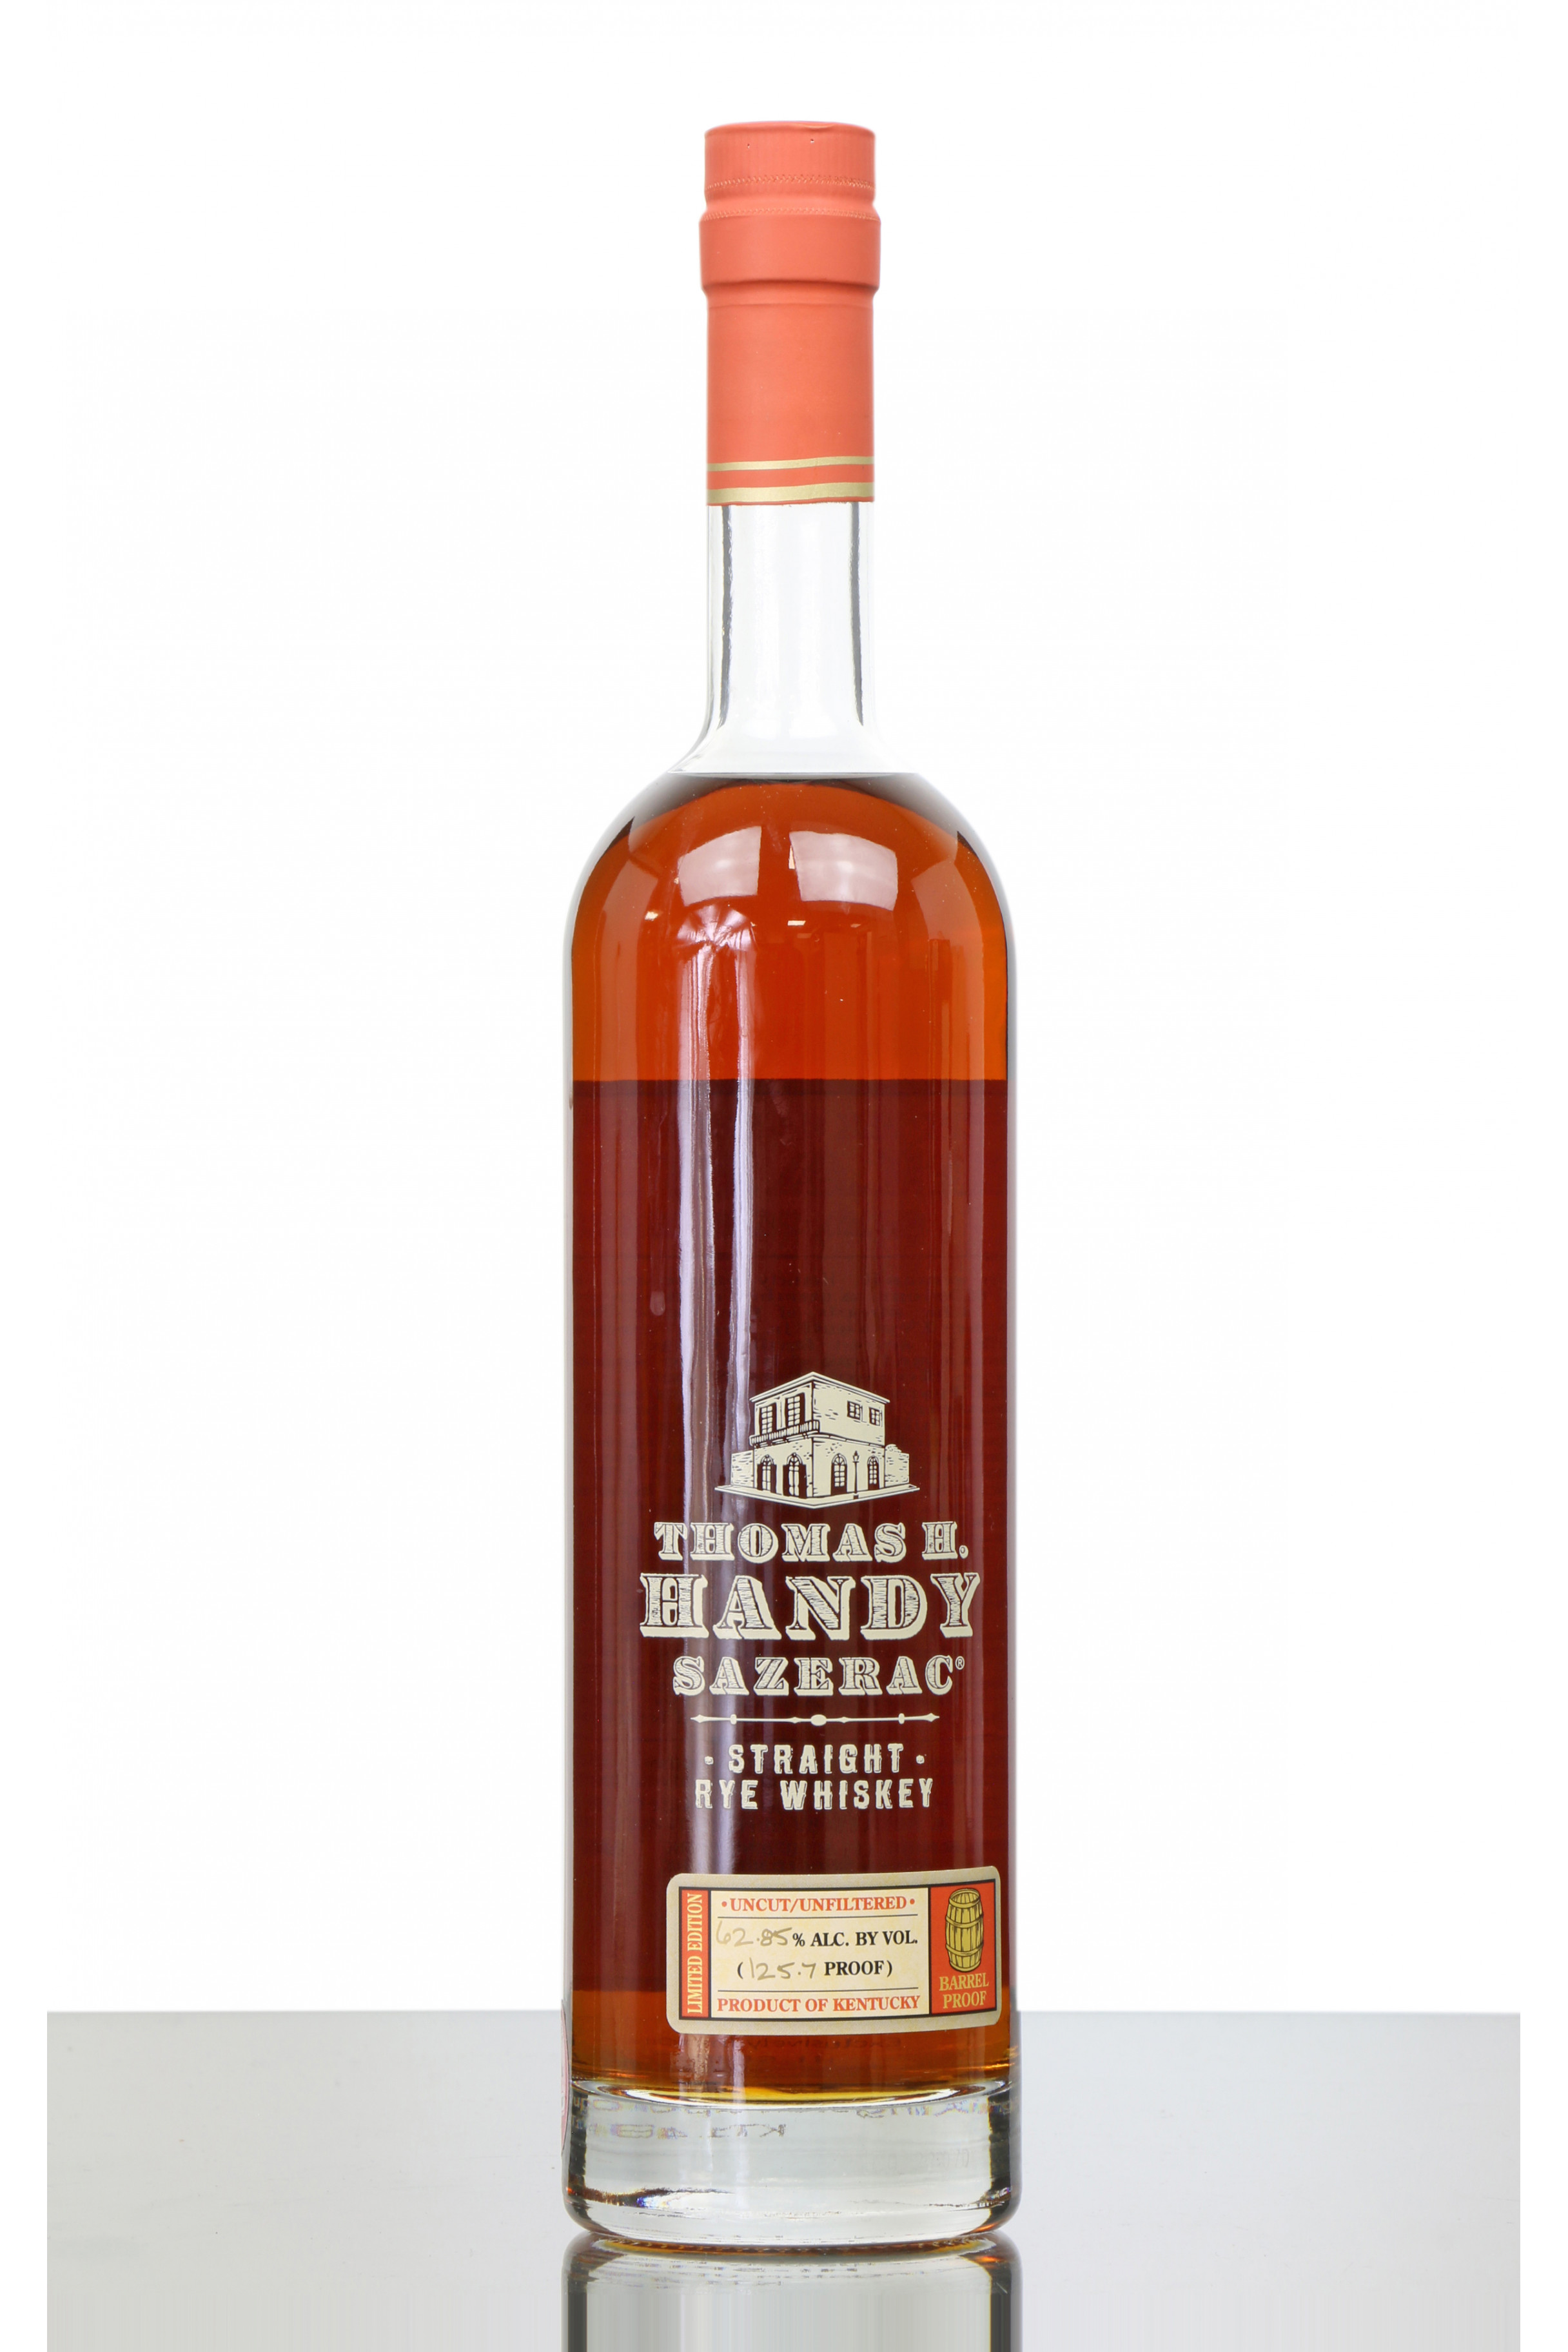 Thomas H. Handy Sazerac Rye Whiskey 2019 Barrel Proof (62.85) Just